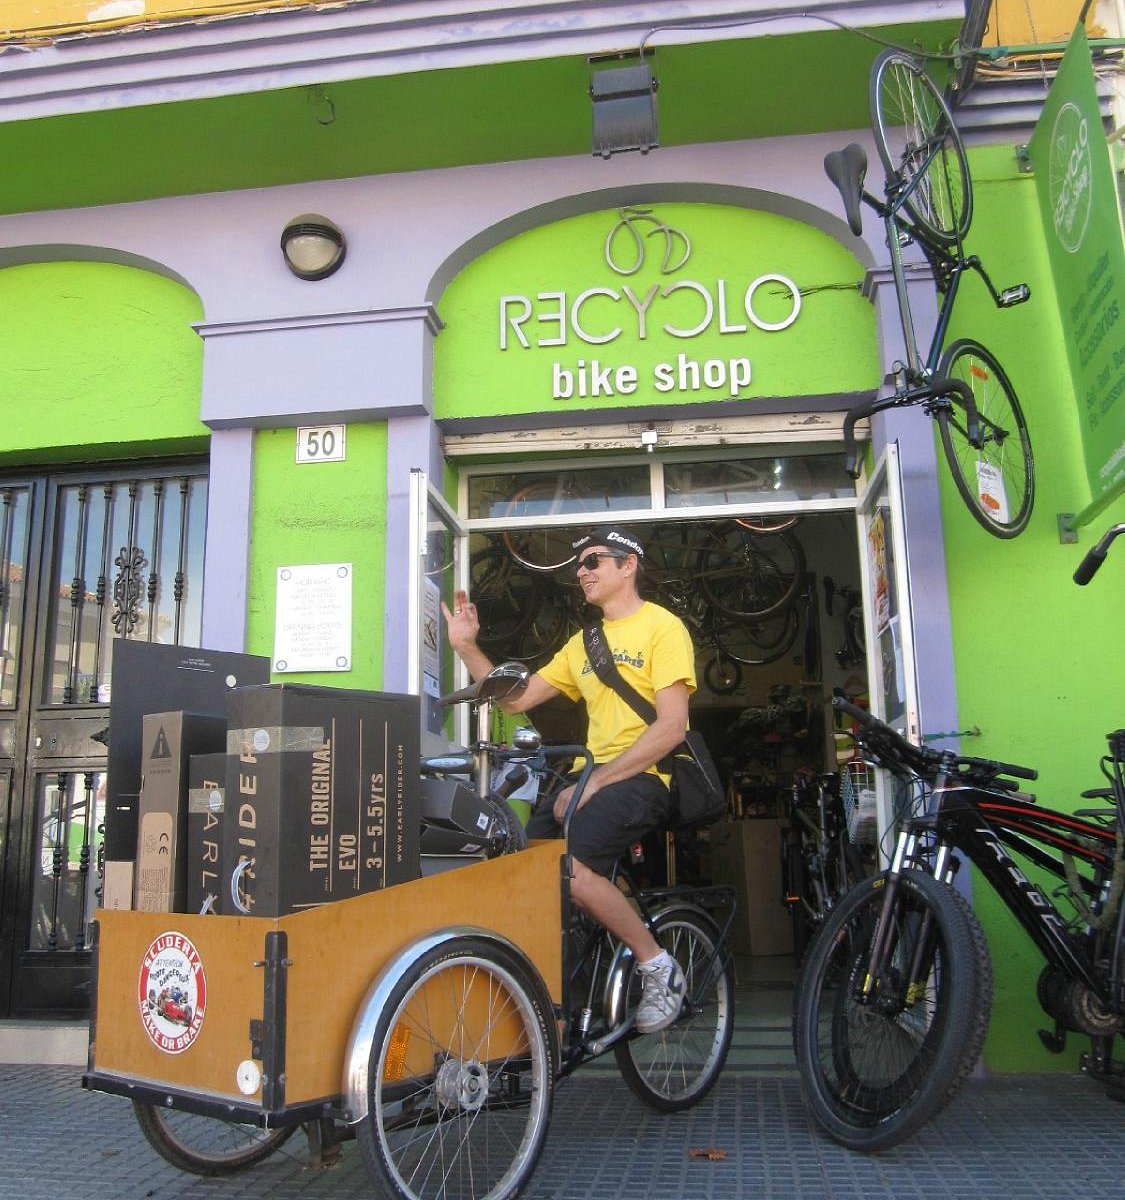 inaktive hestekræfter Stort univers Recyclo Bike Shop (Malaga, Spanien) - anmeldelser - Tripadvisor